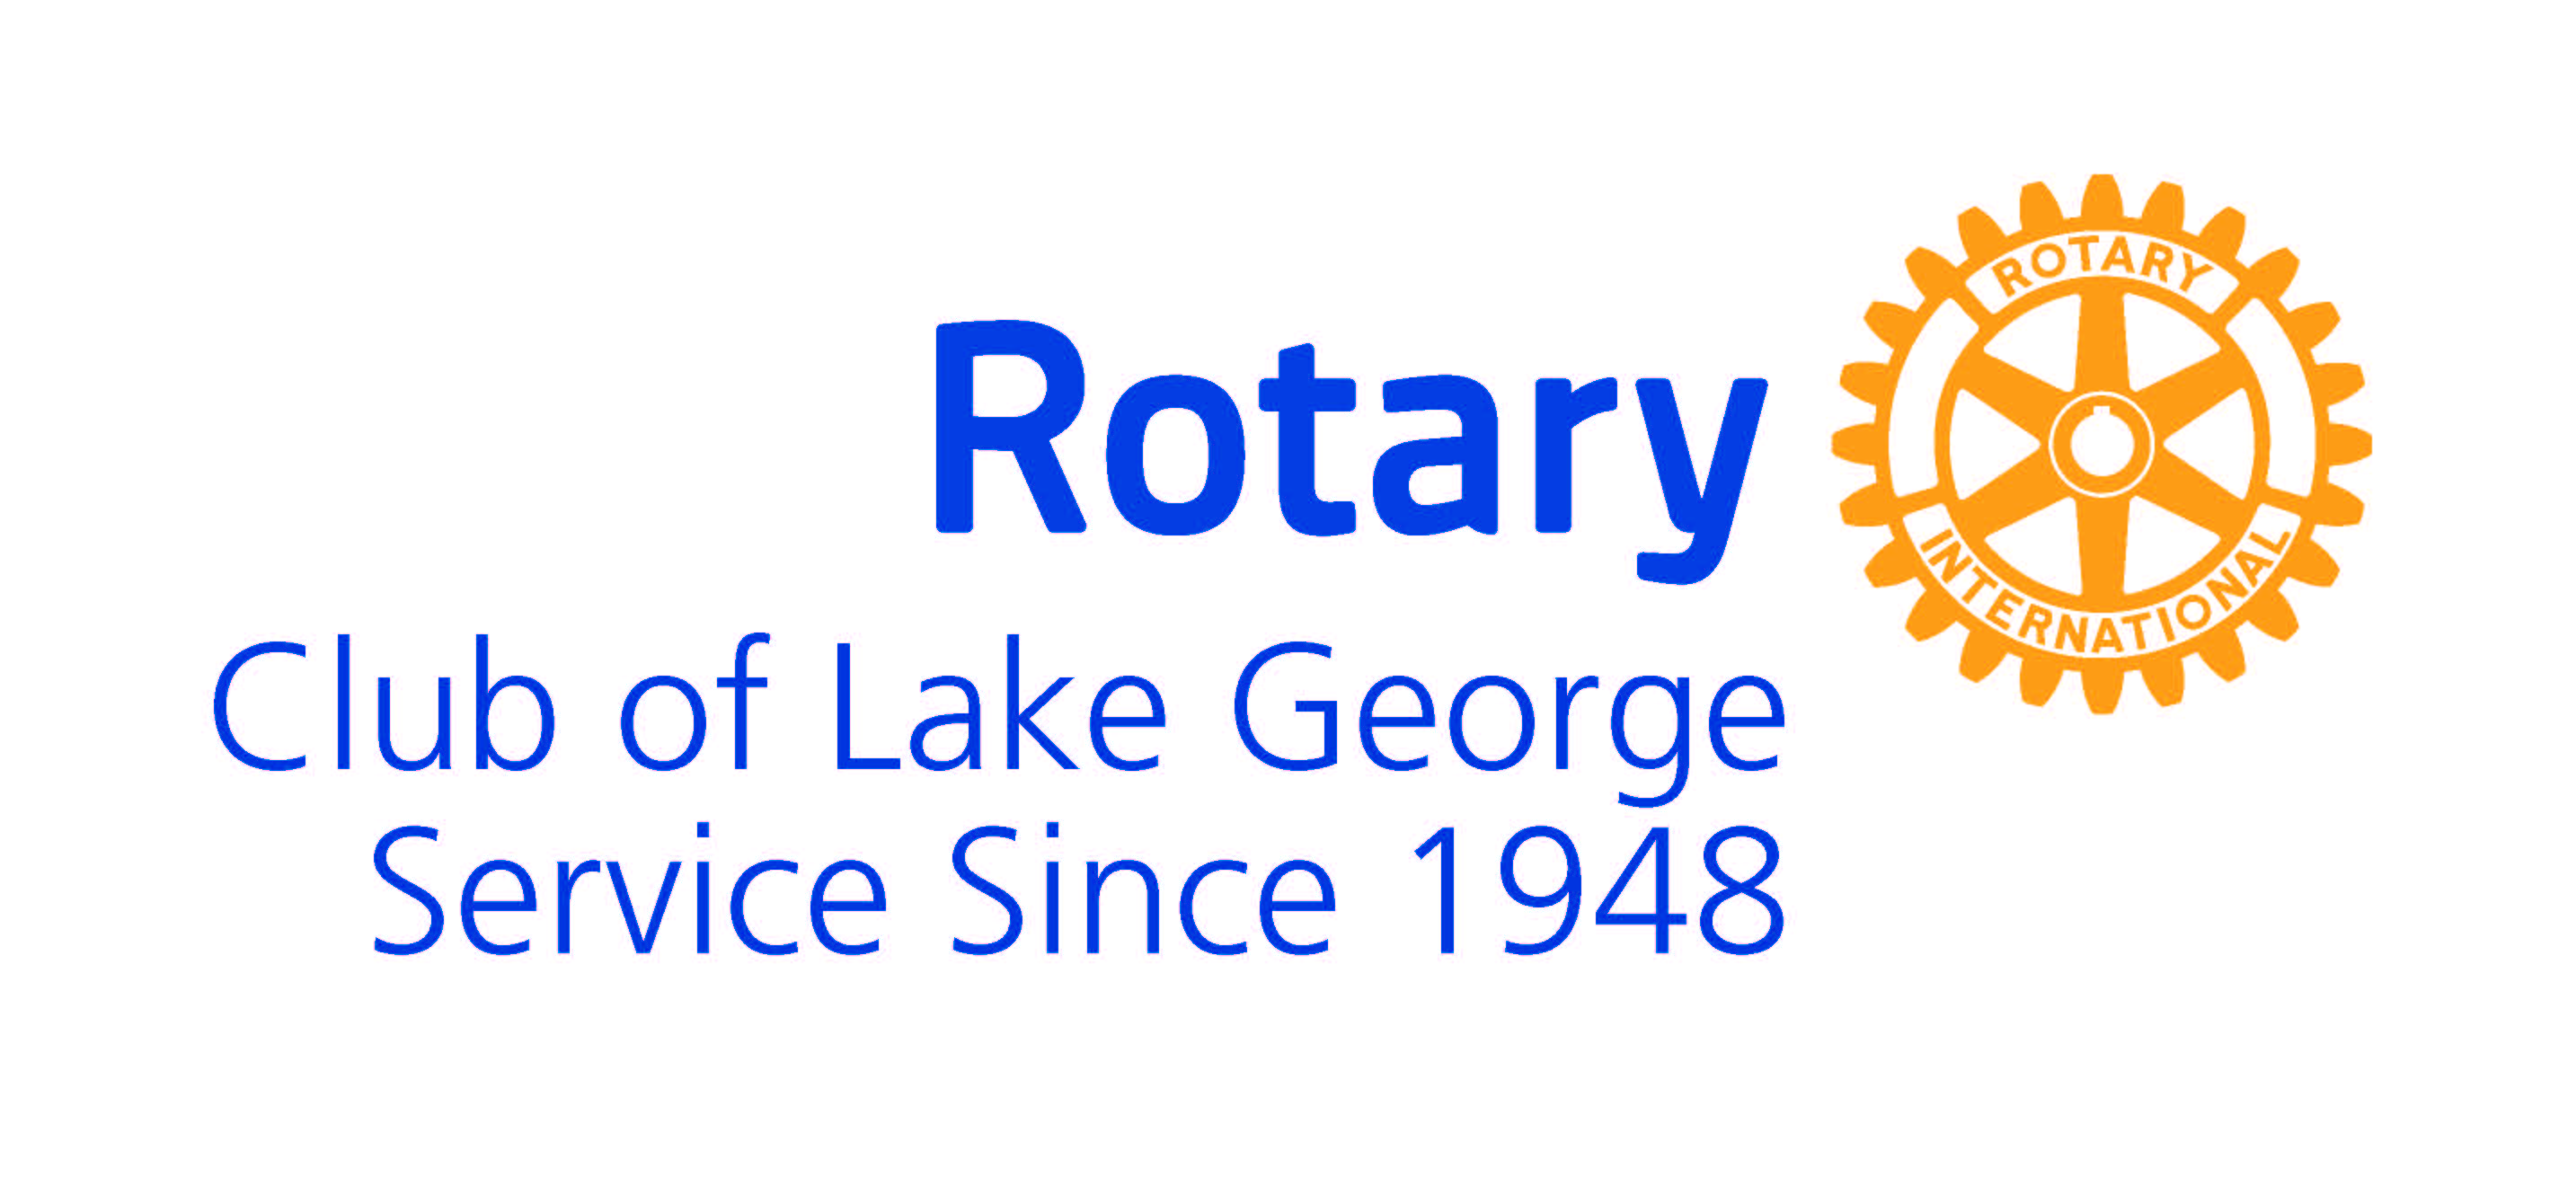 Rotary Club of Lake George logo